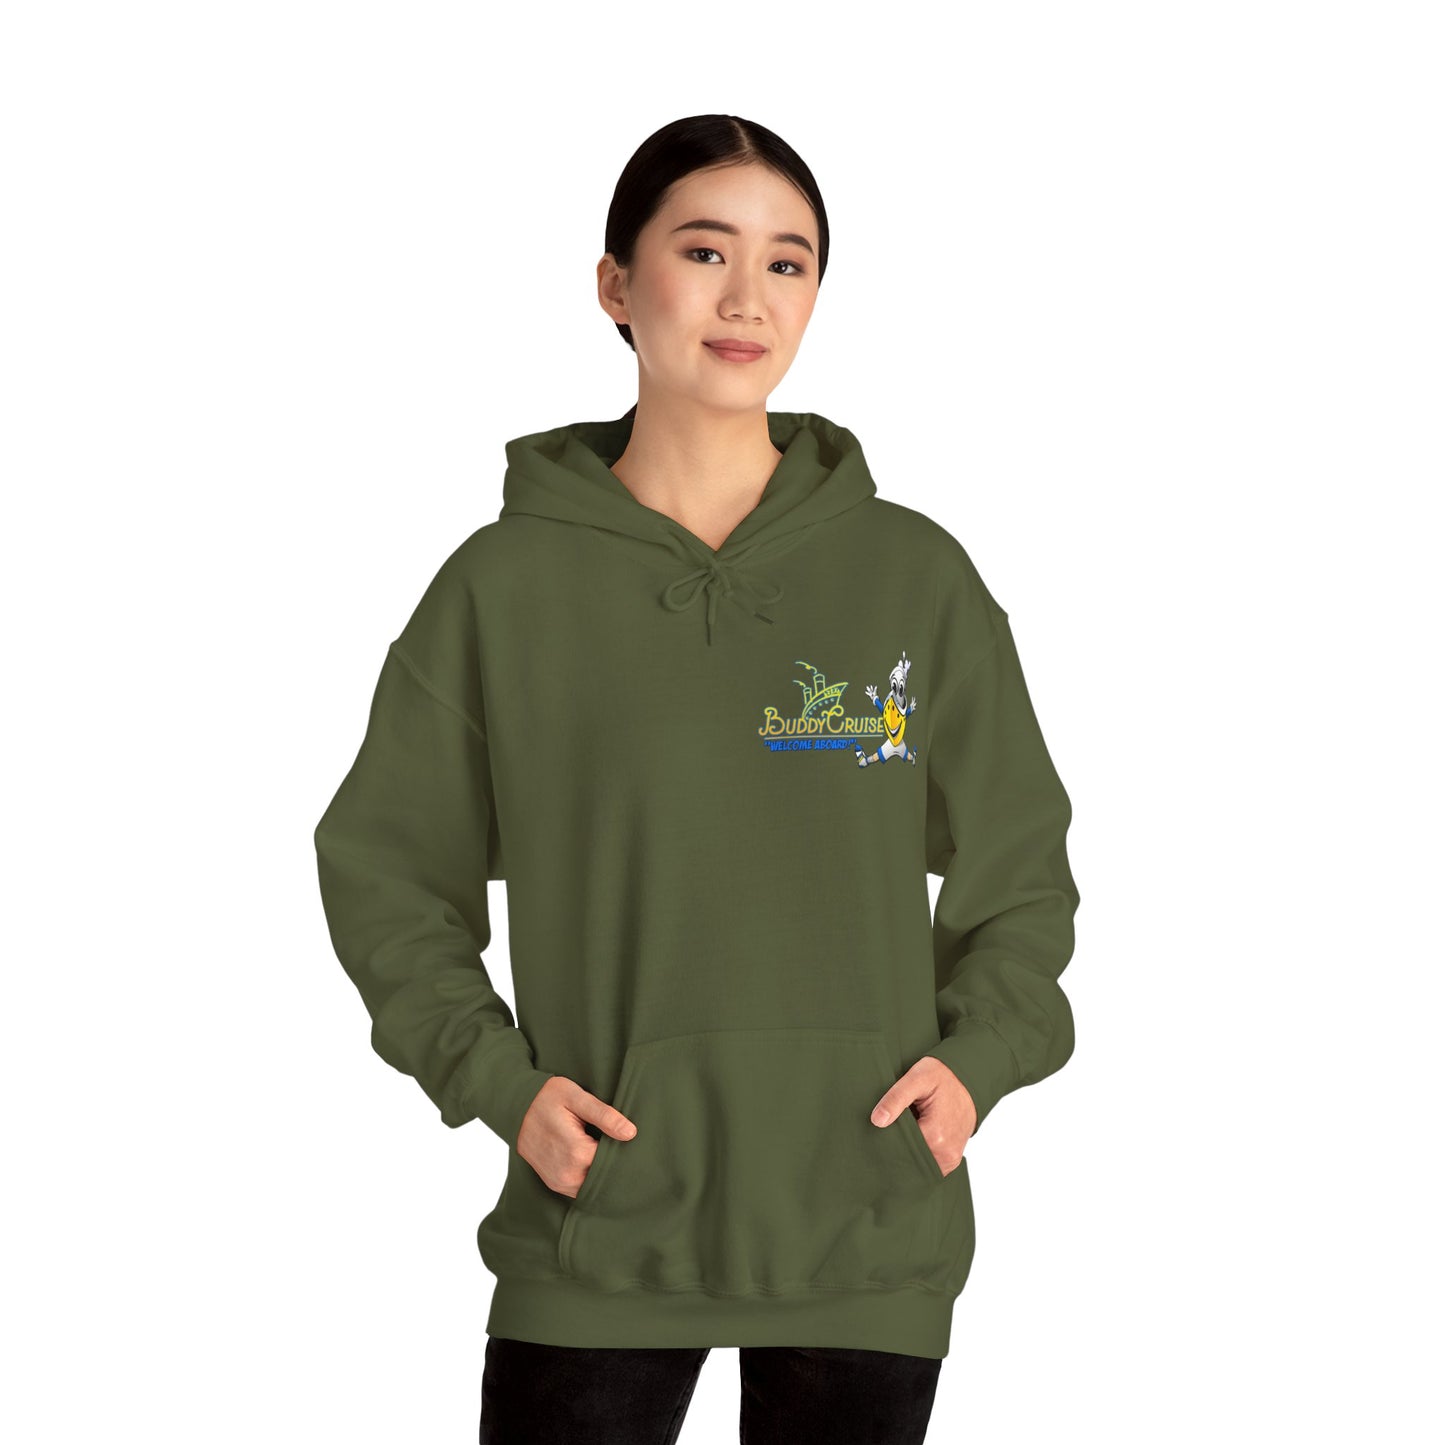 BUDDY CRUISE Unisex Heavy Blend Hooded Sweatshirt in 9 Colors